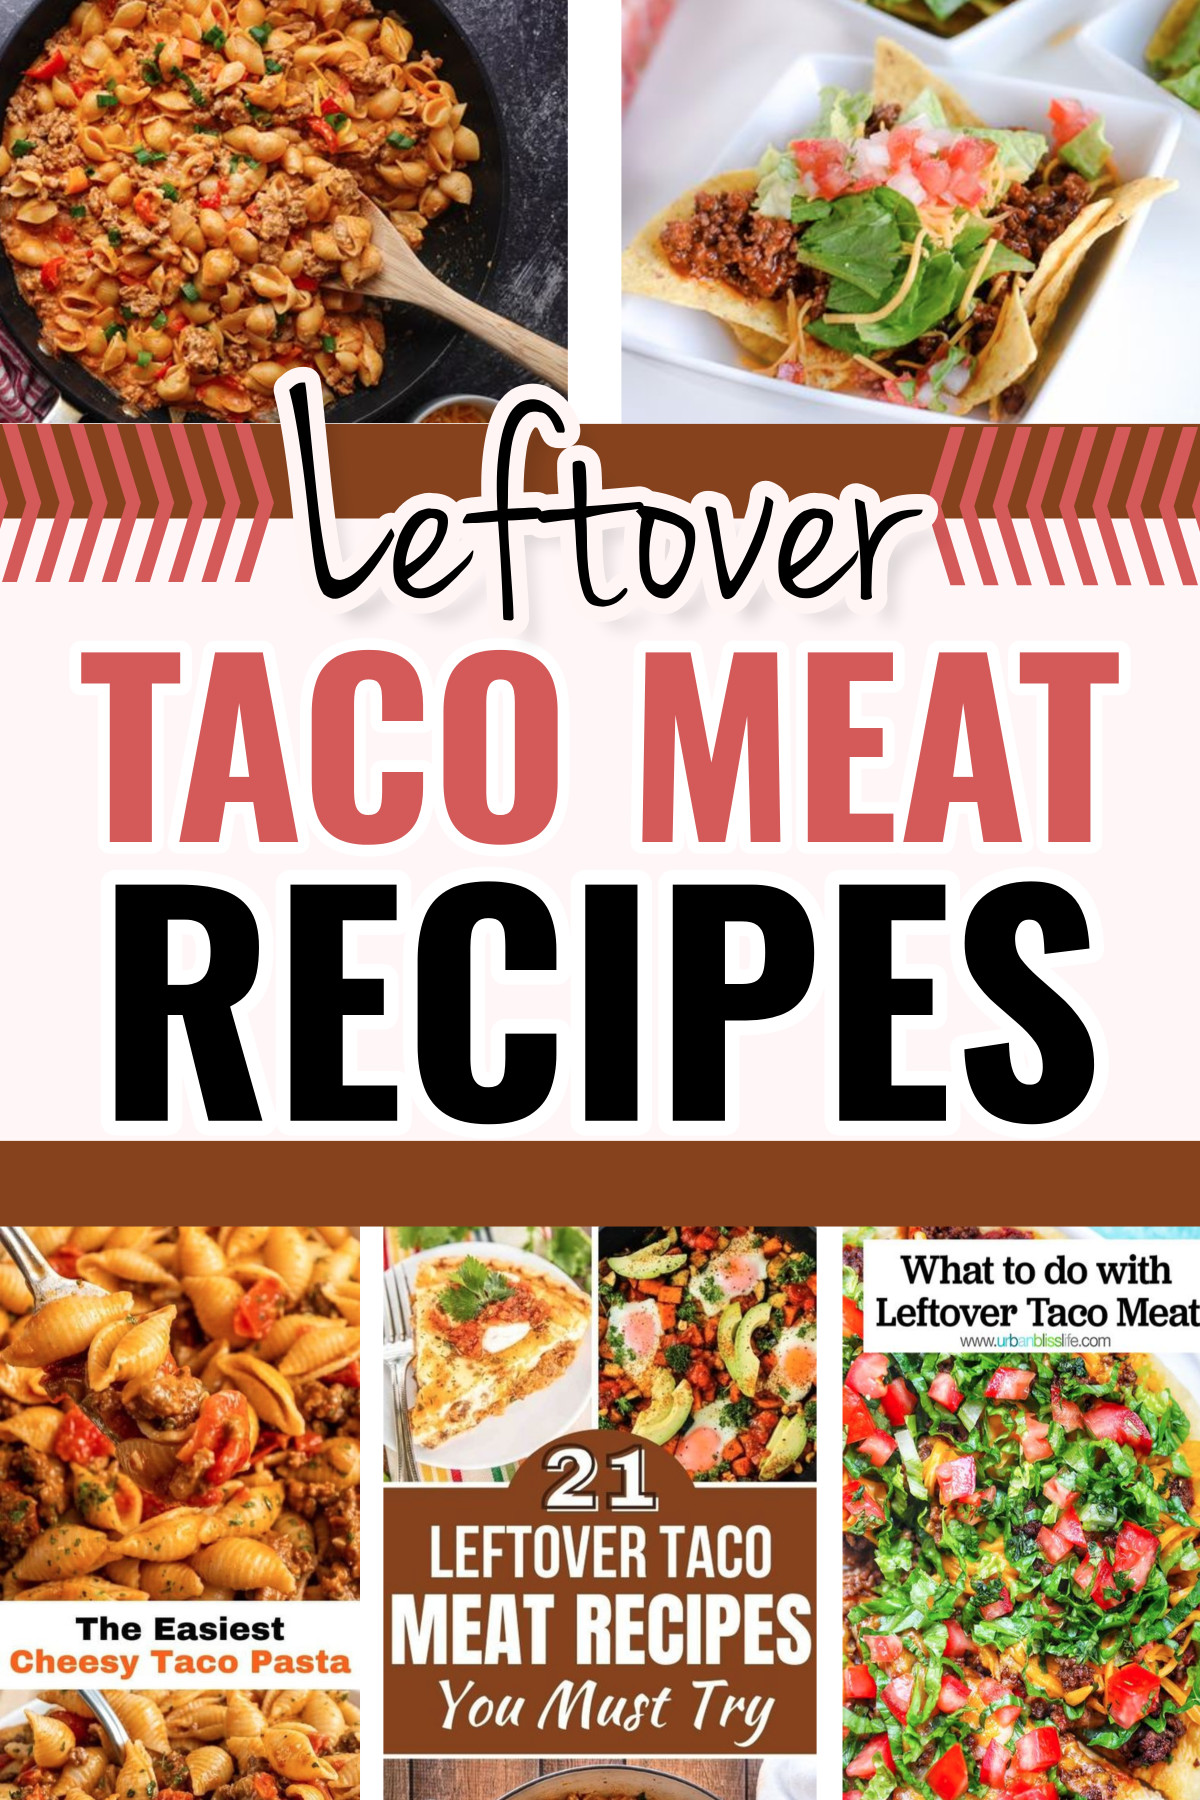 Leftover taco meat recipes